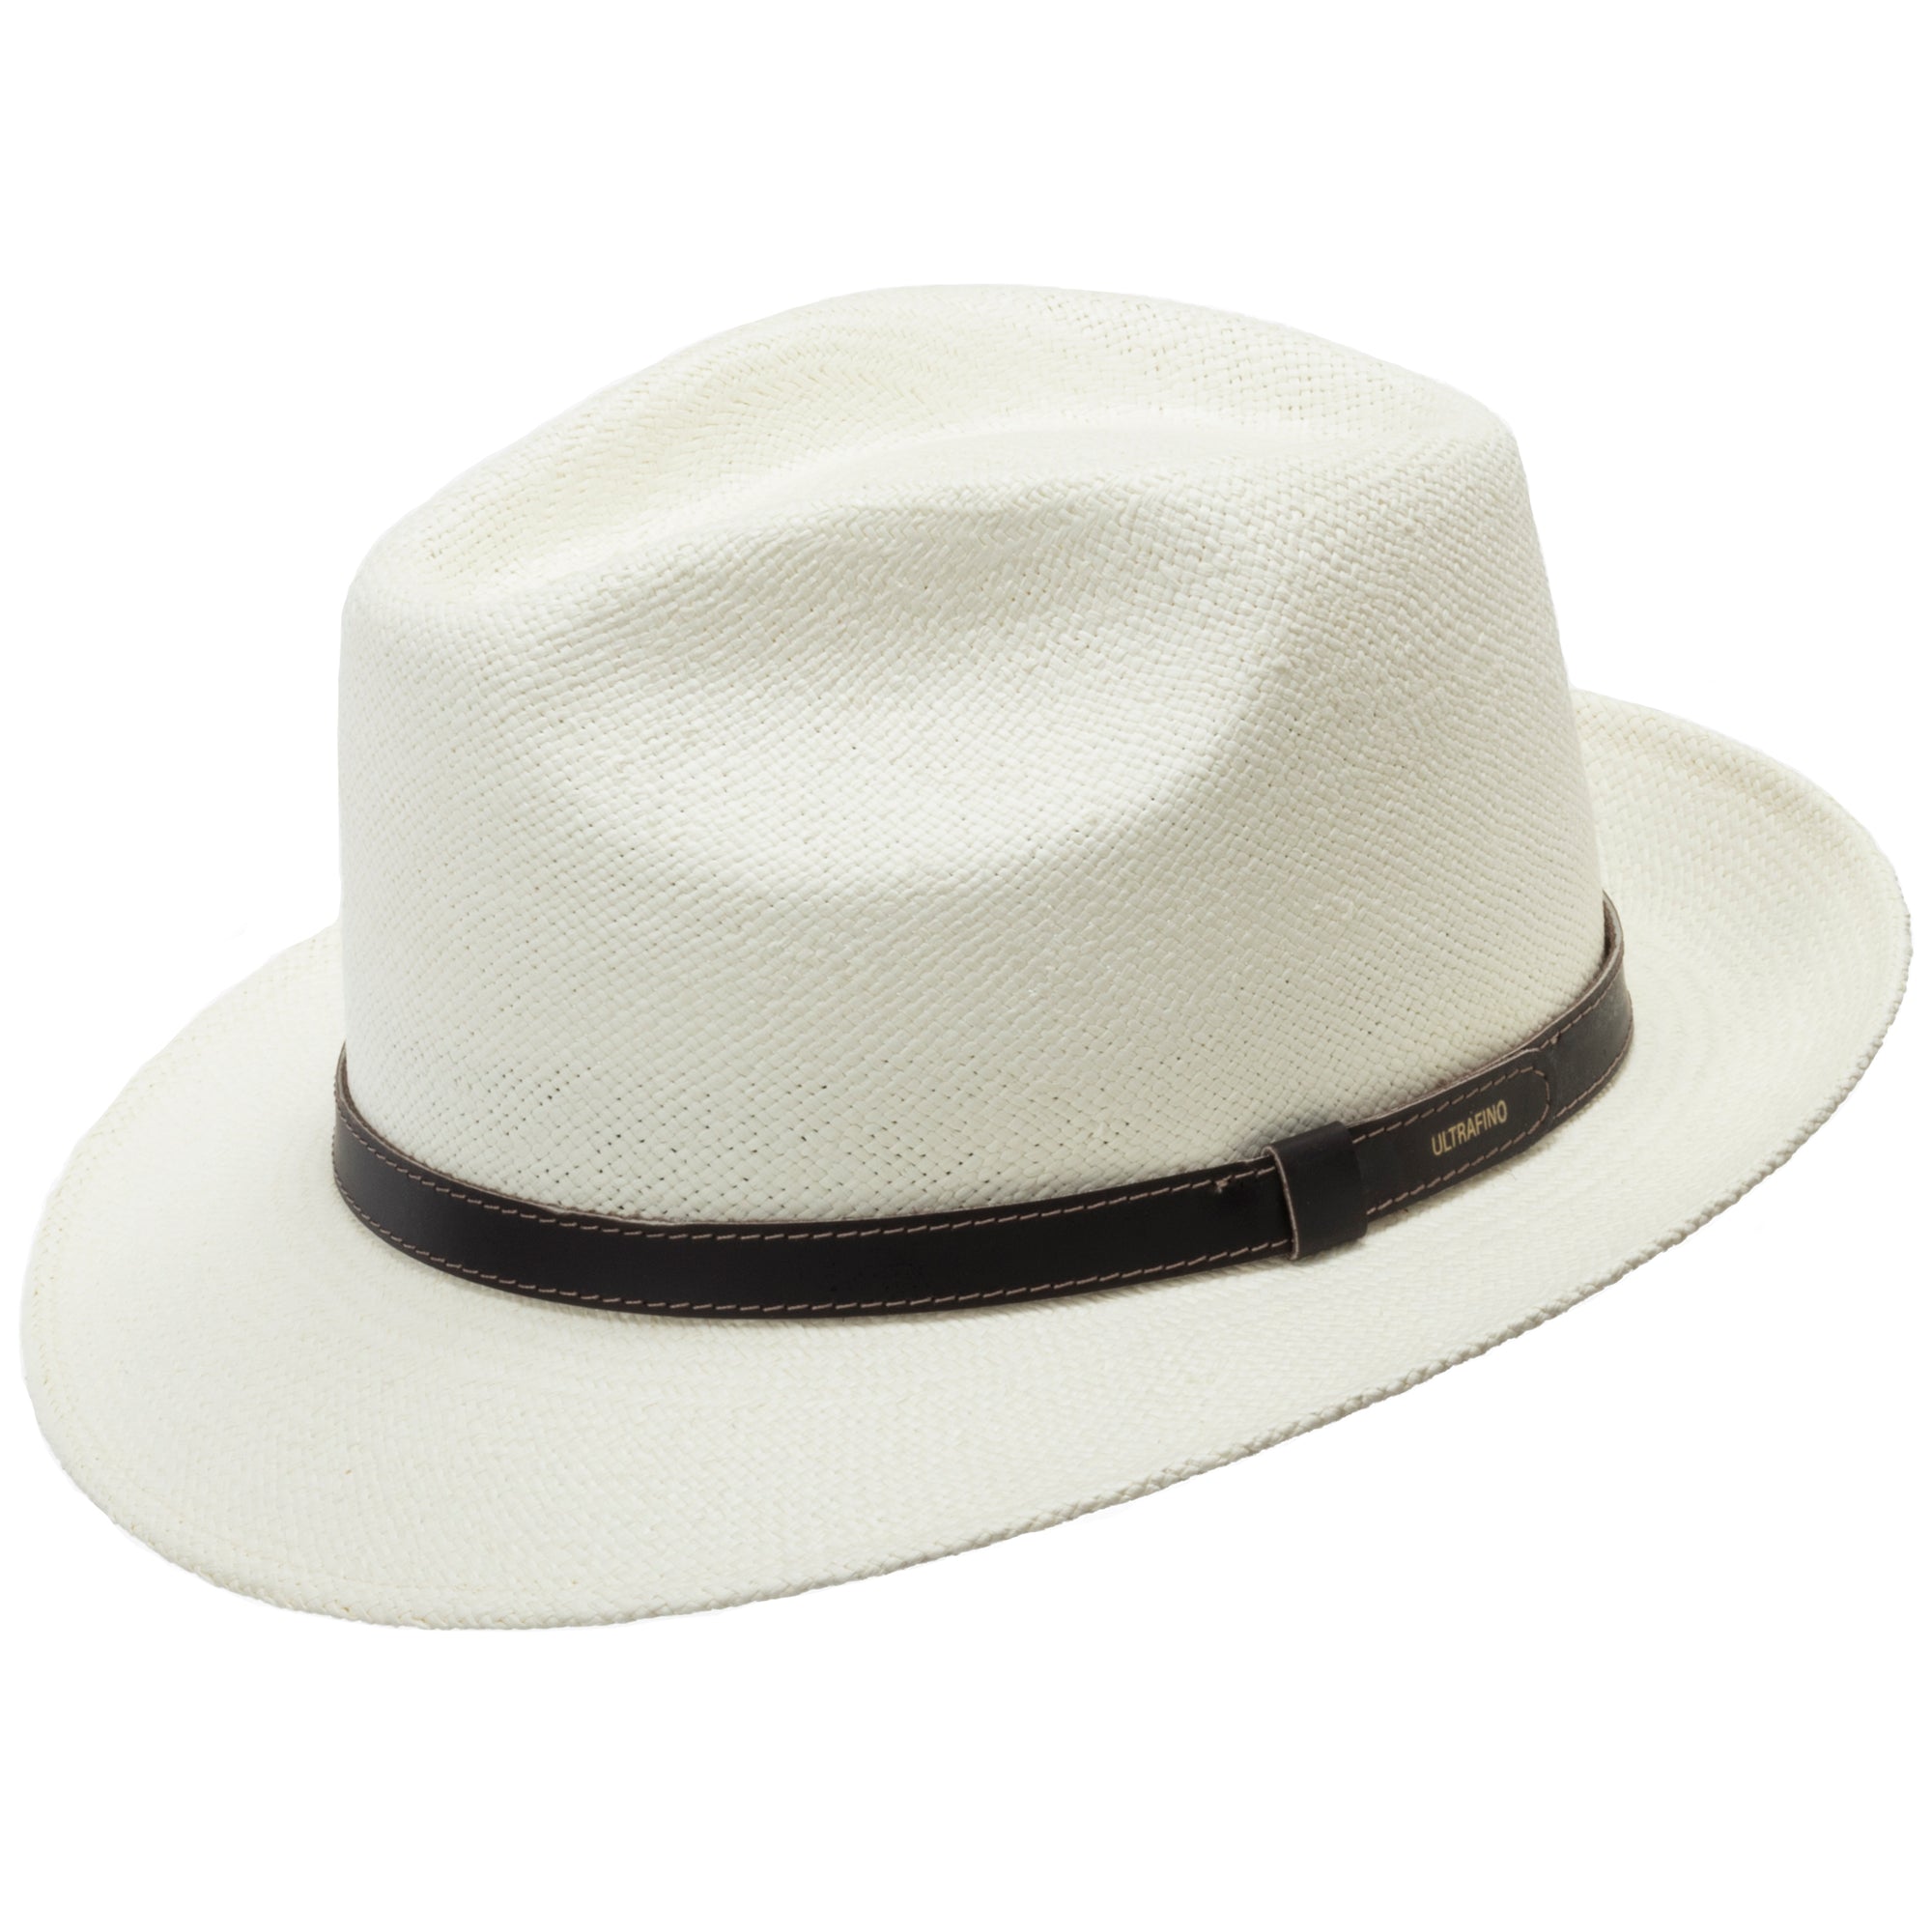 Panama Hats - Ultrafino